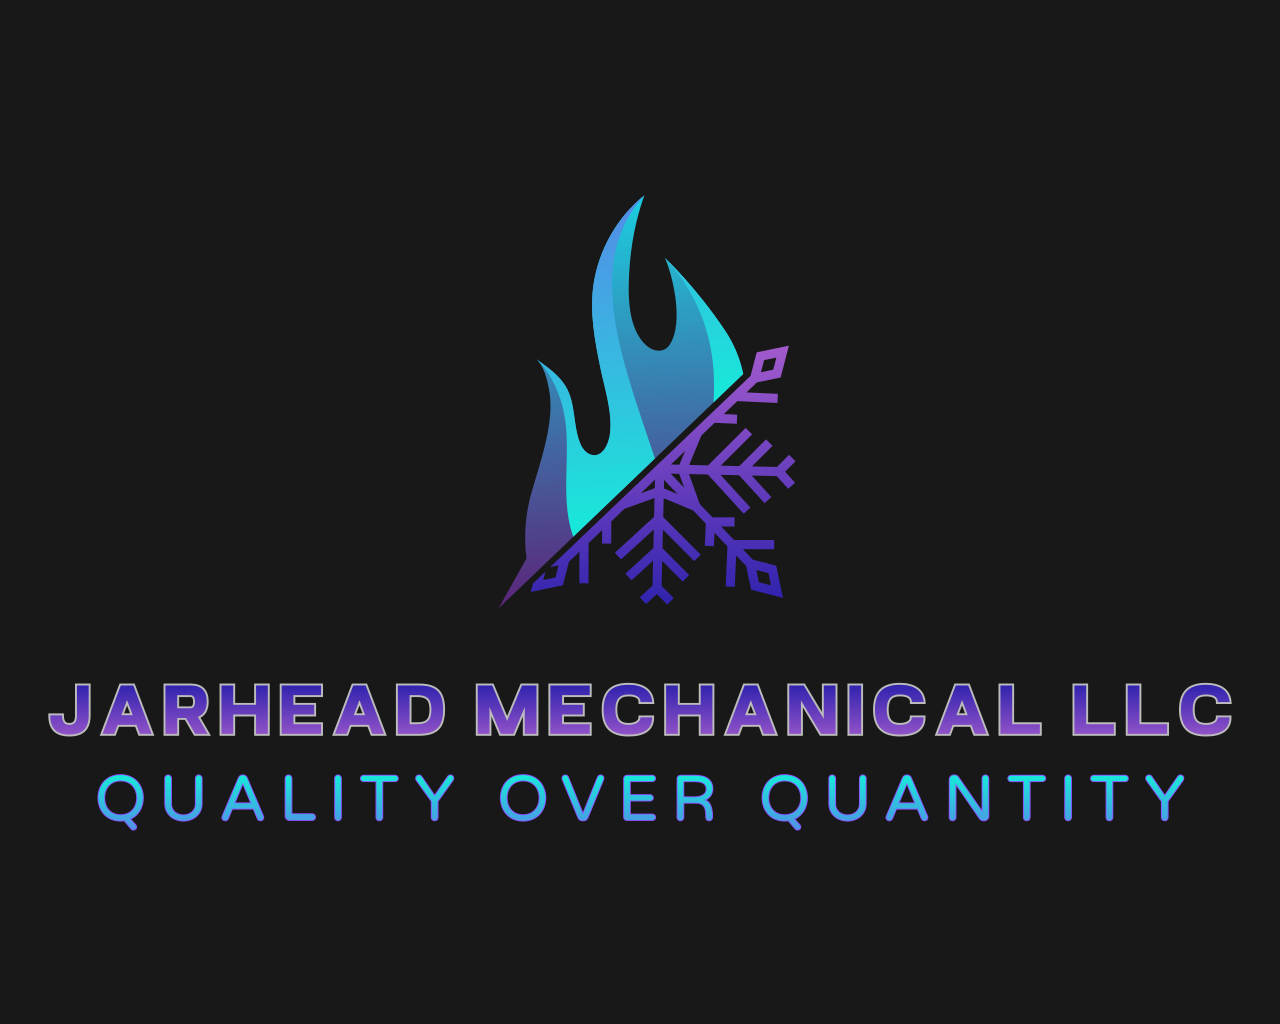 Jarhead Mechanical LLC